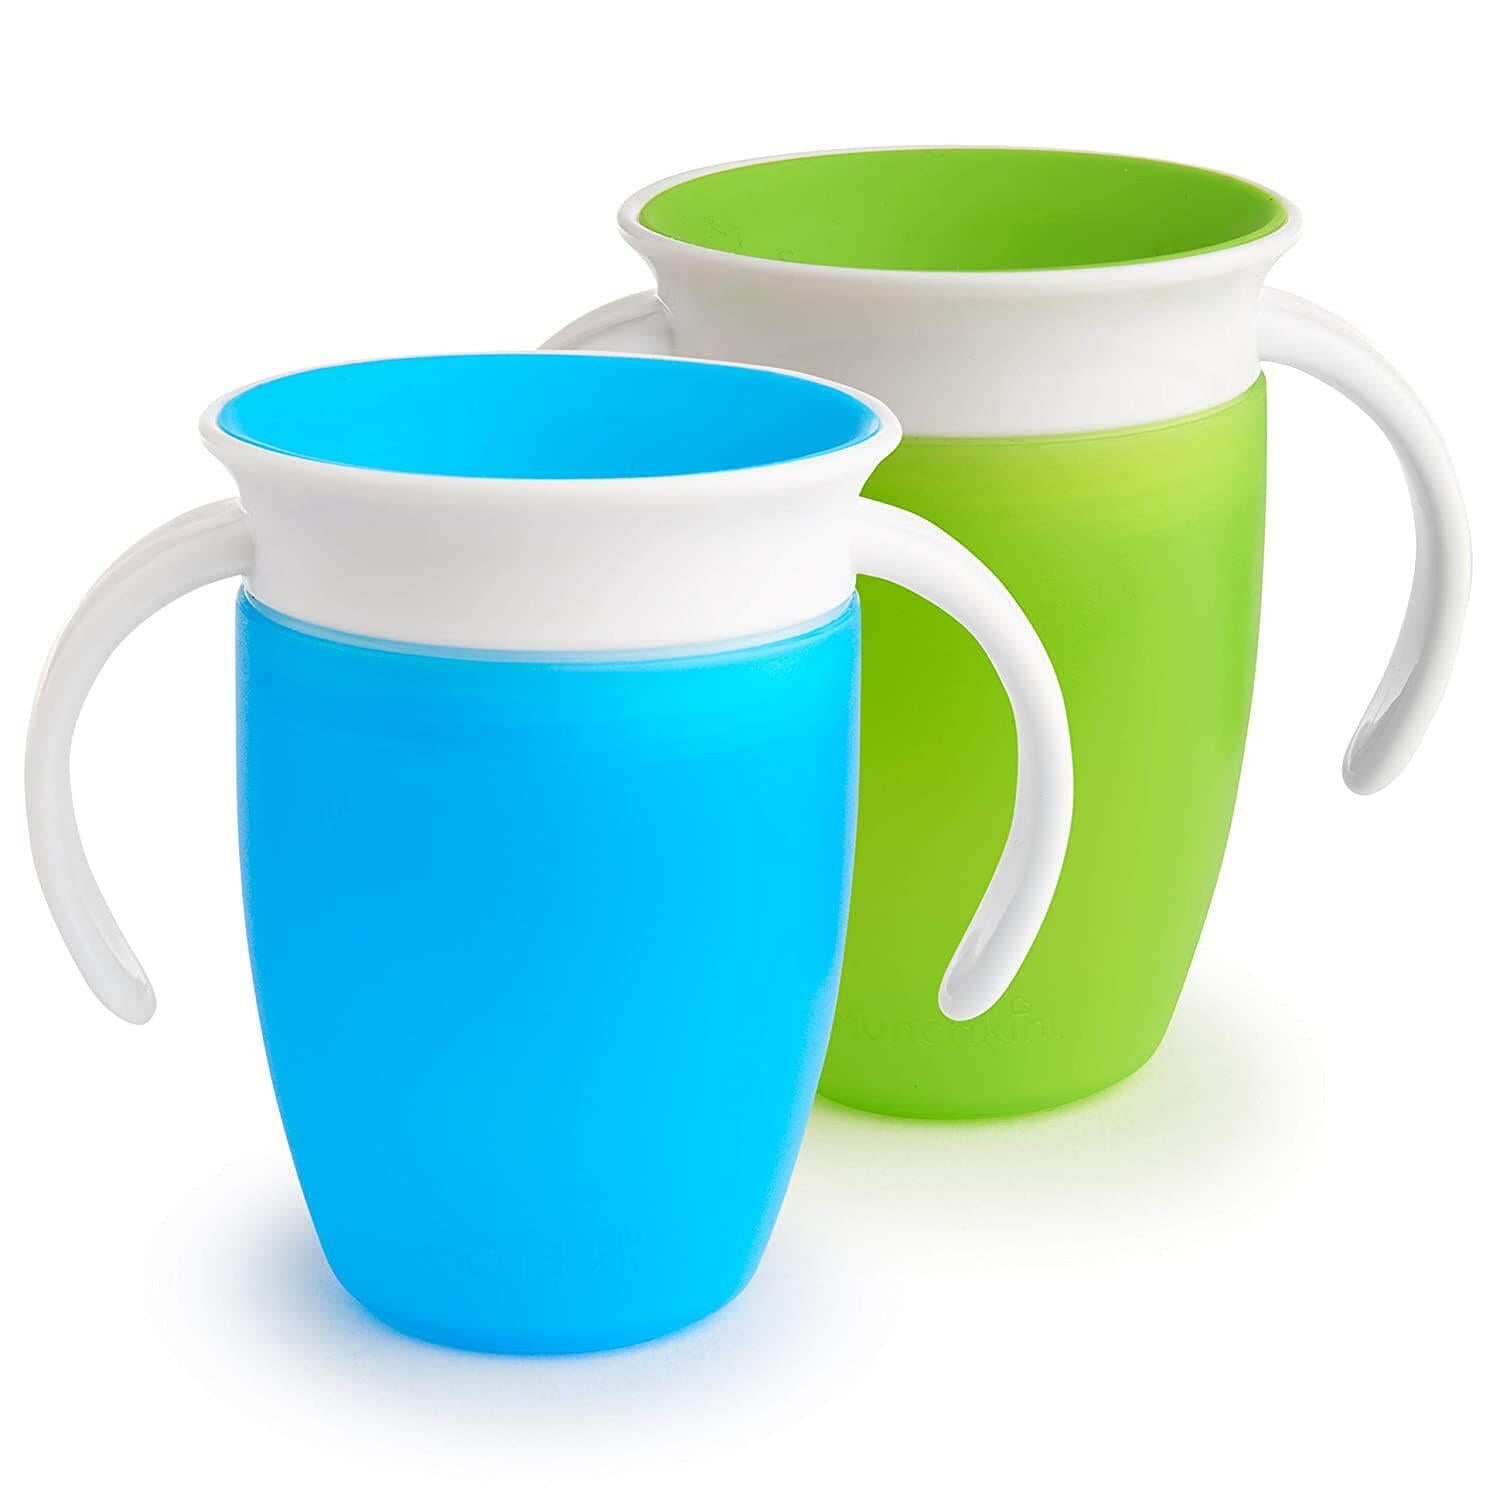 munchkin trainer cups - green / blue